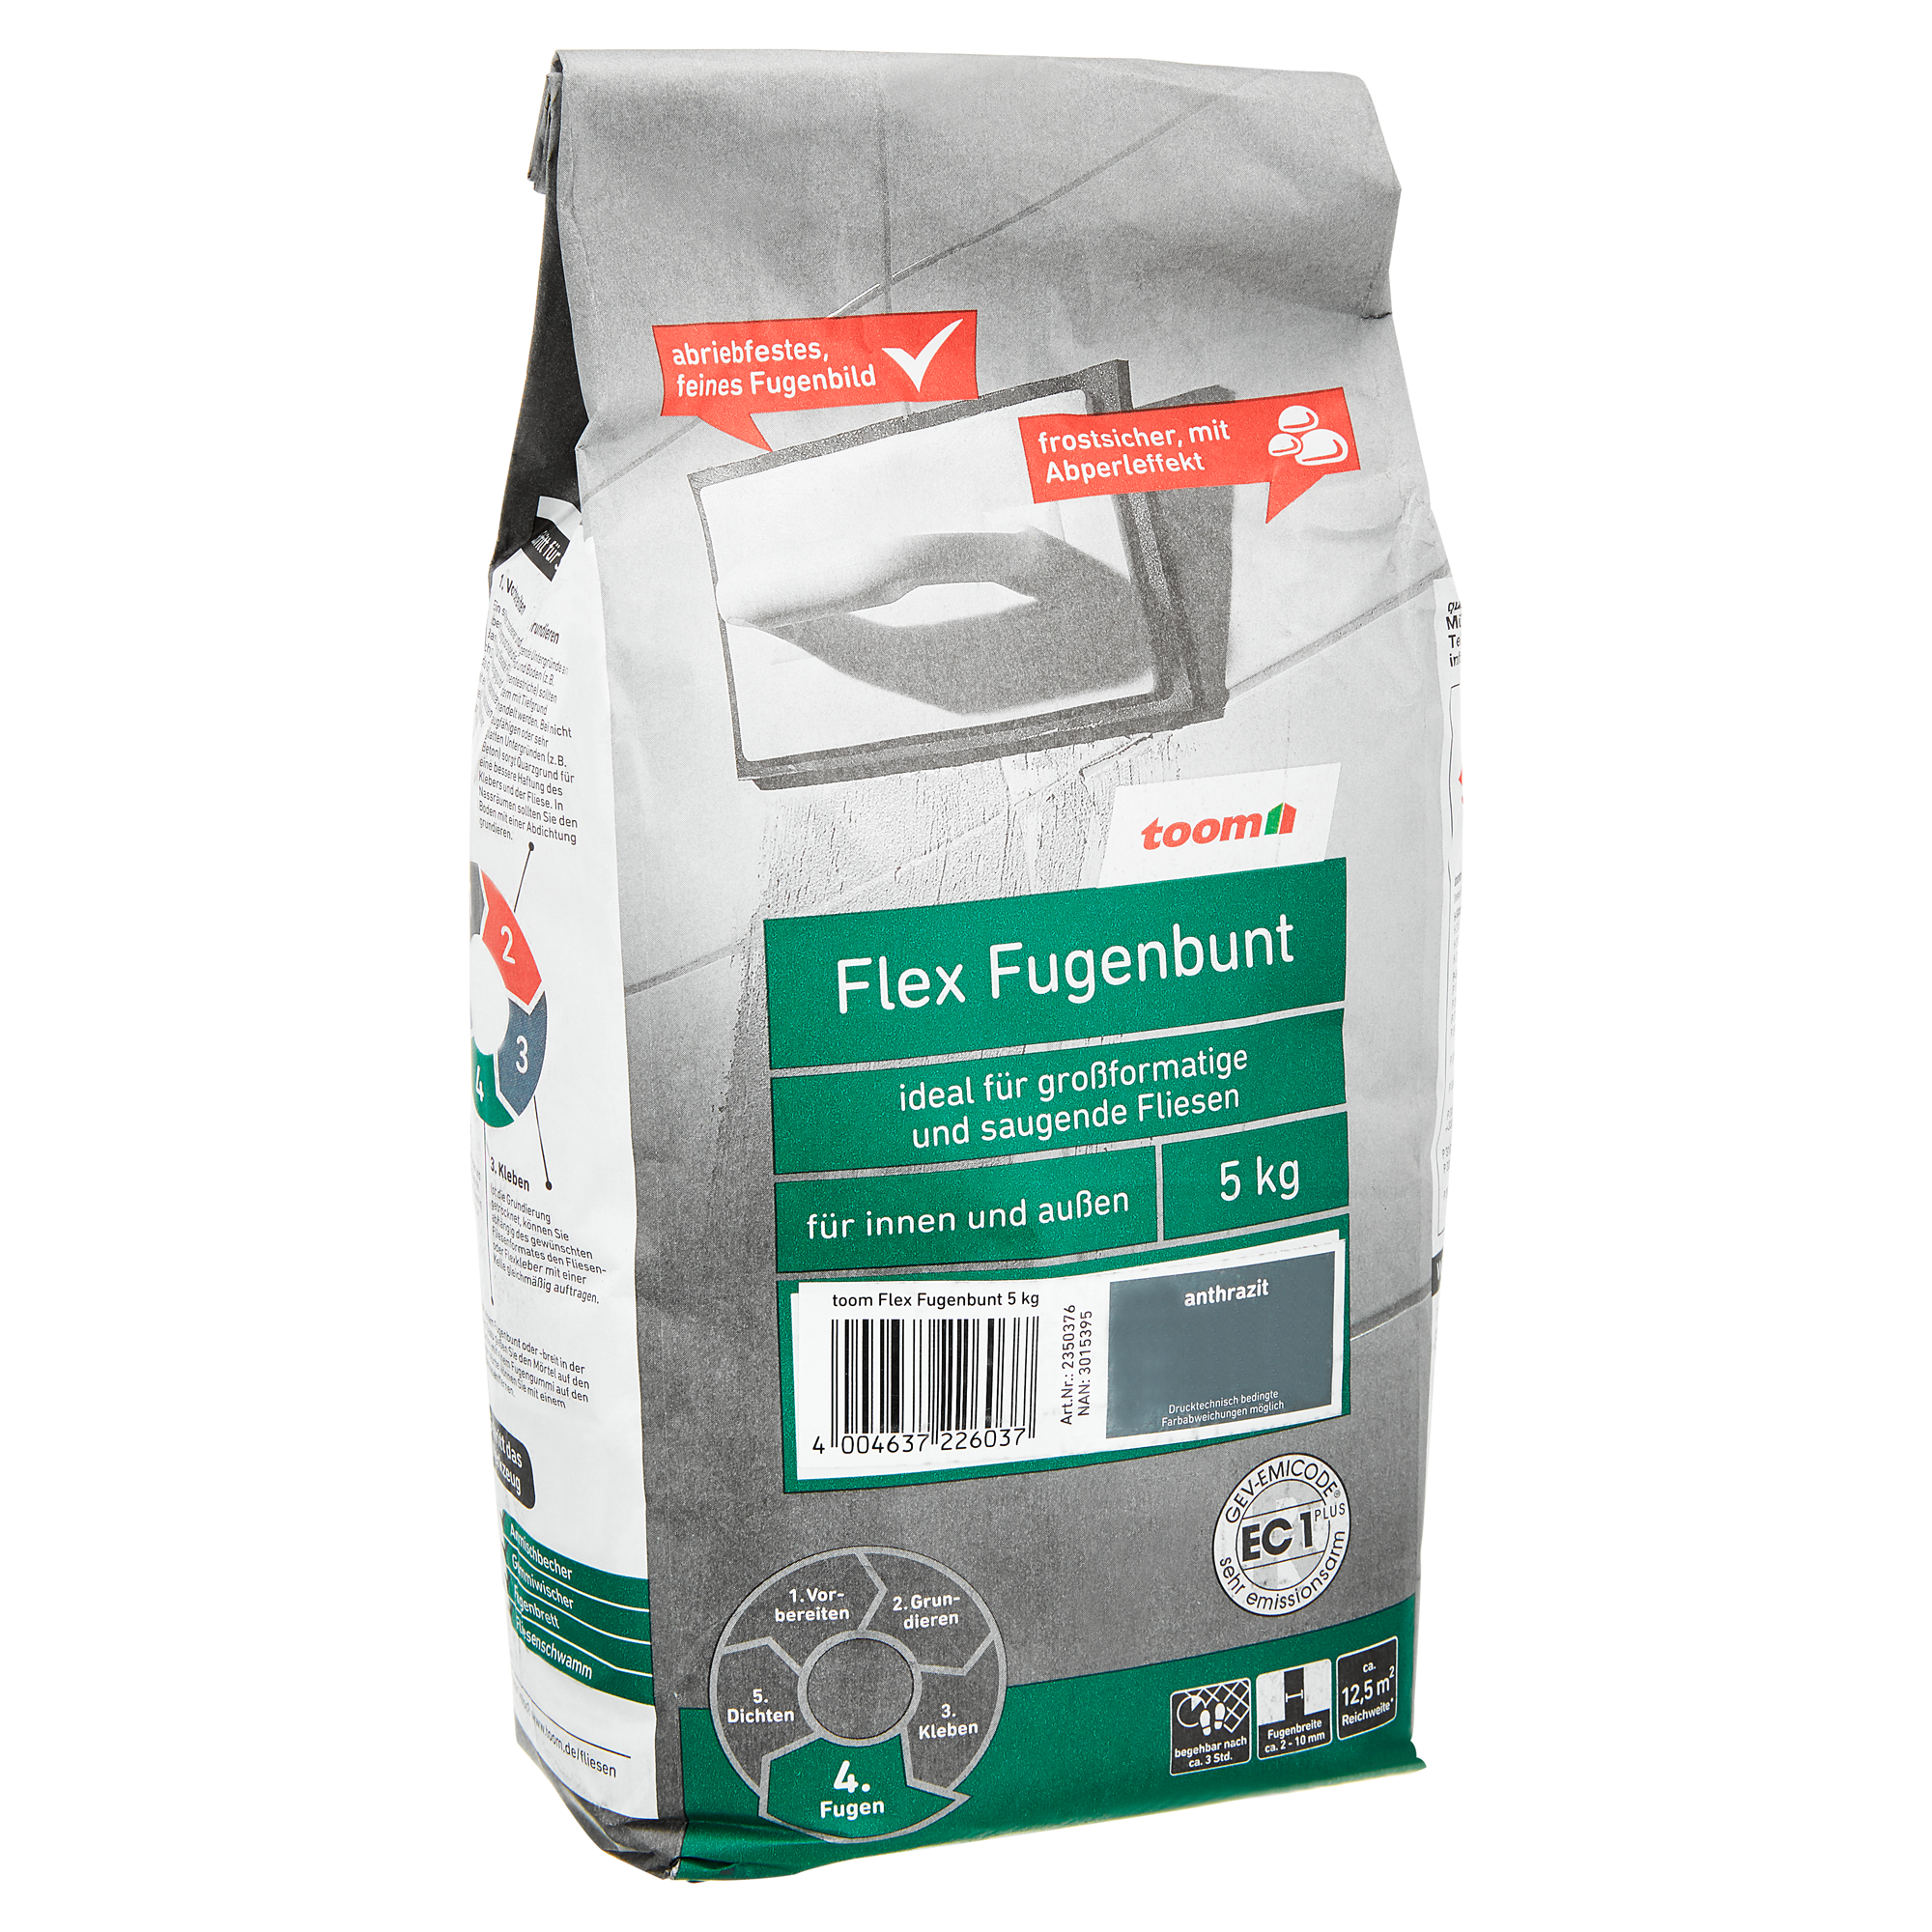 Flex-Fugenbunt anthrazit 5 kg toom + product picture